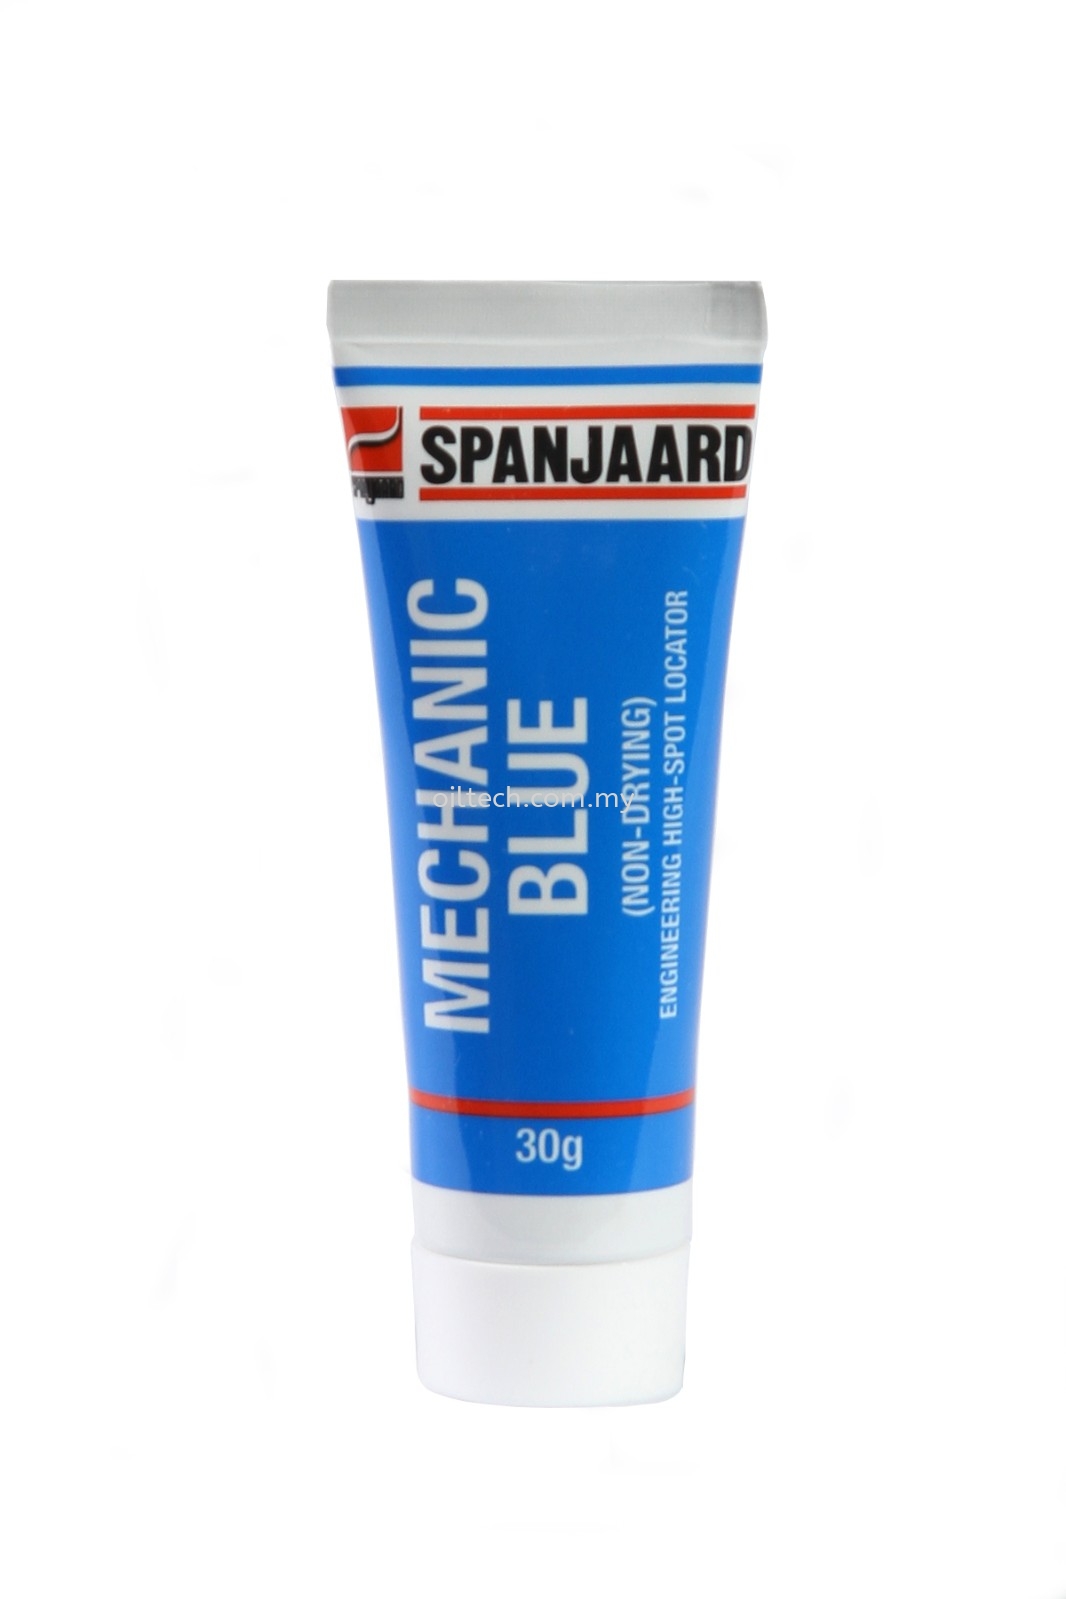 Mechanic Blue Paste (grease) - Spanjaard Malaysia